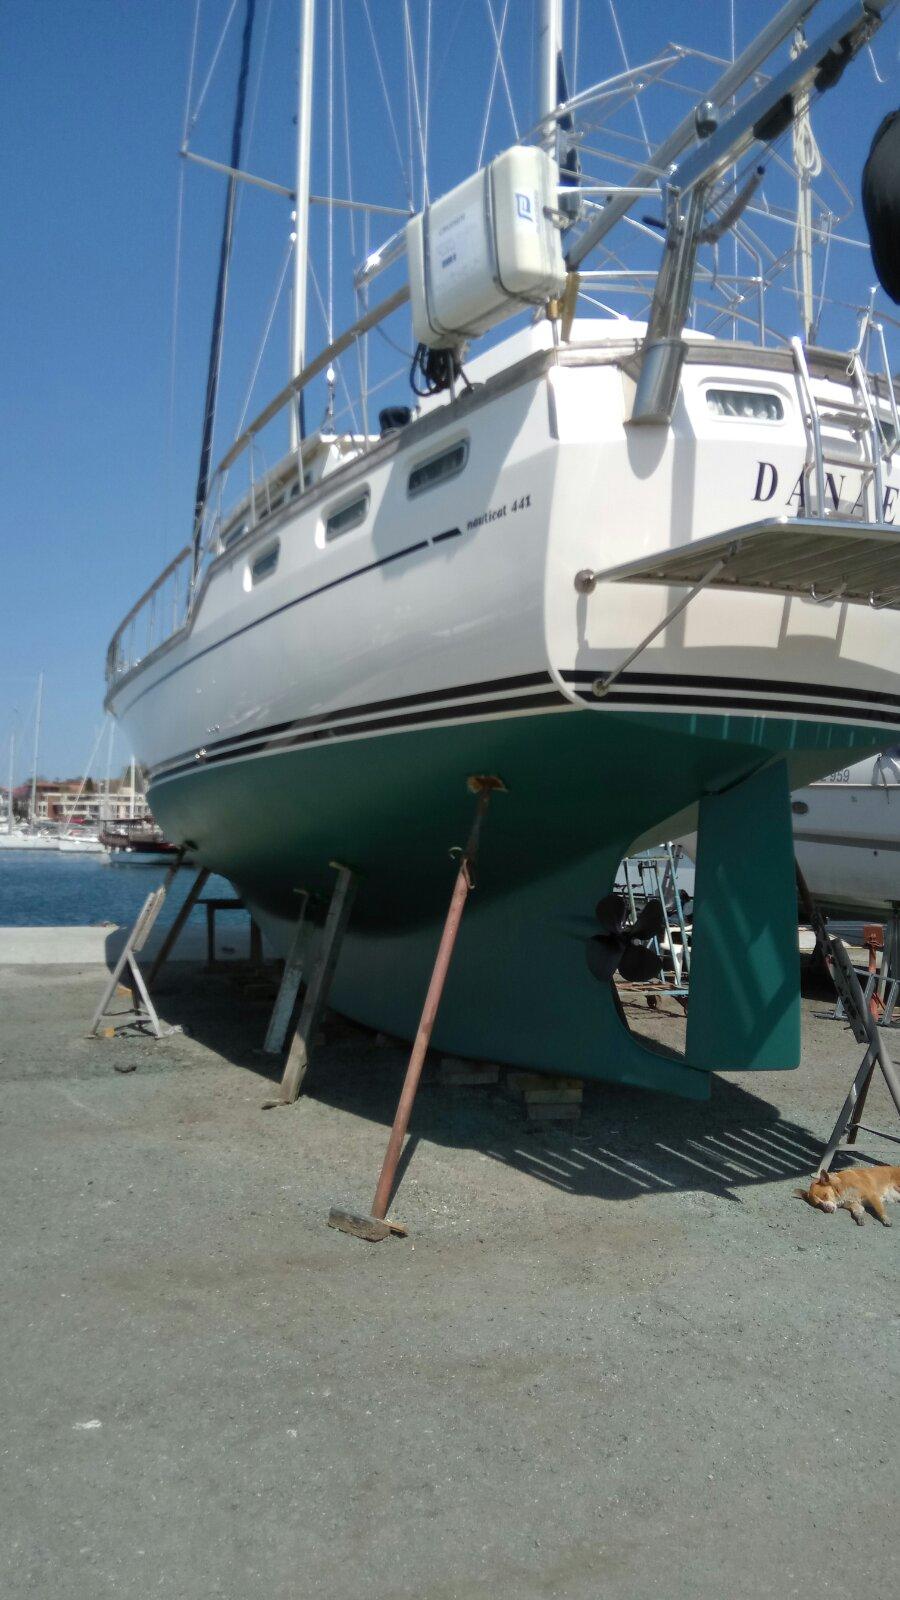 Nauticat 441 Ketch boat for sale